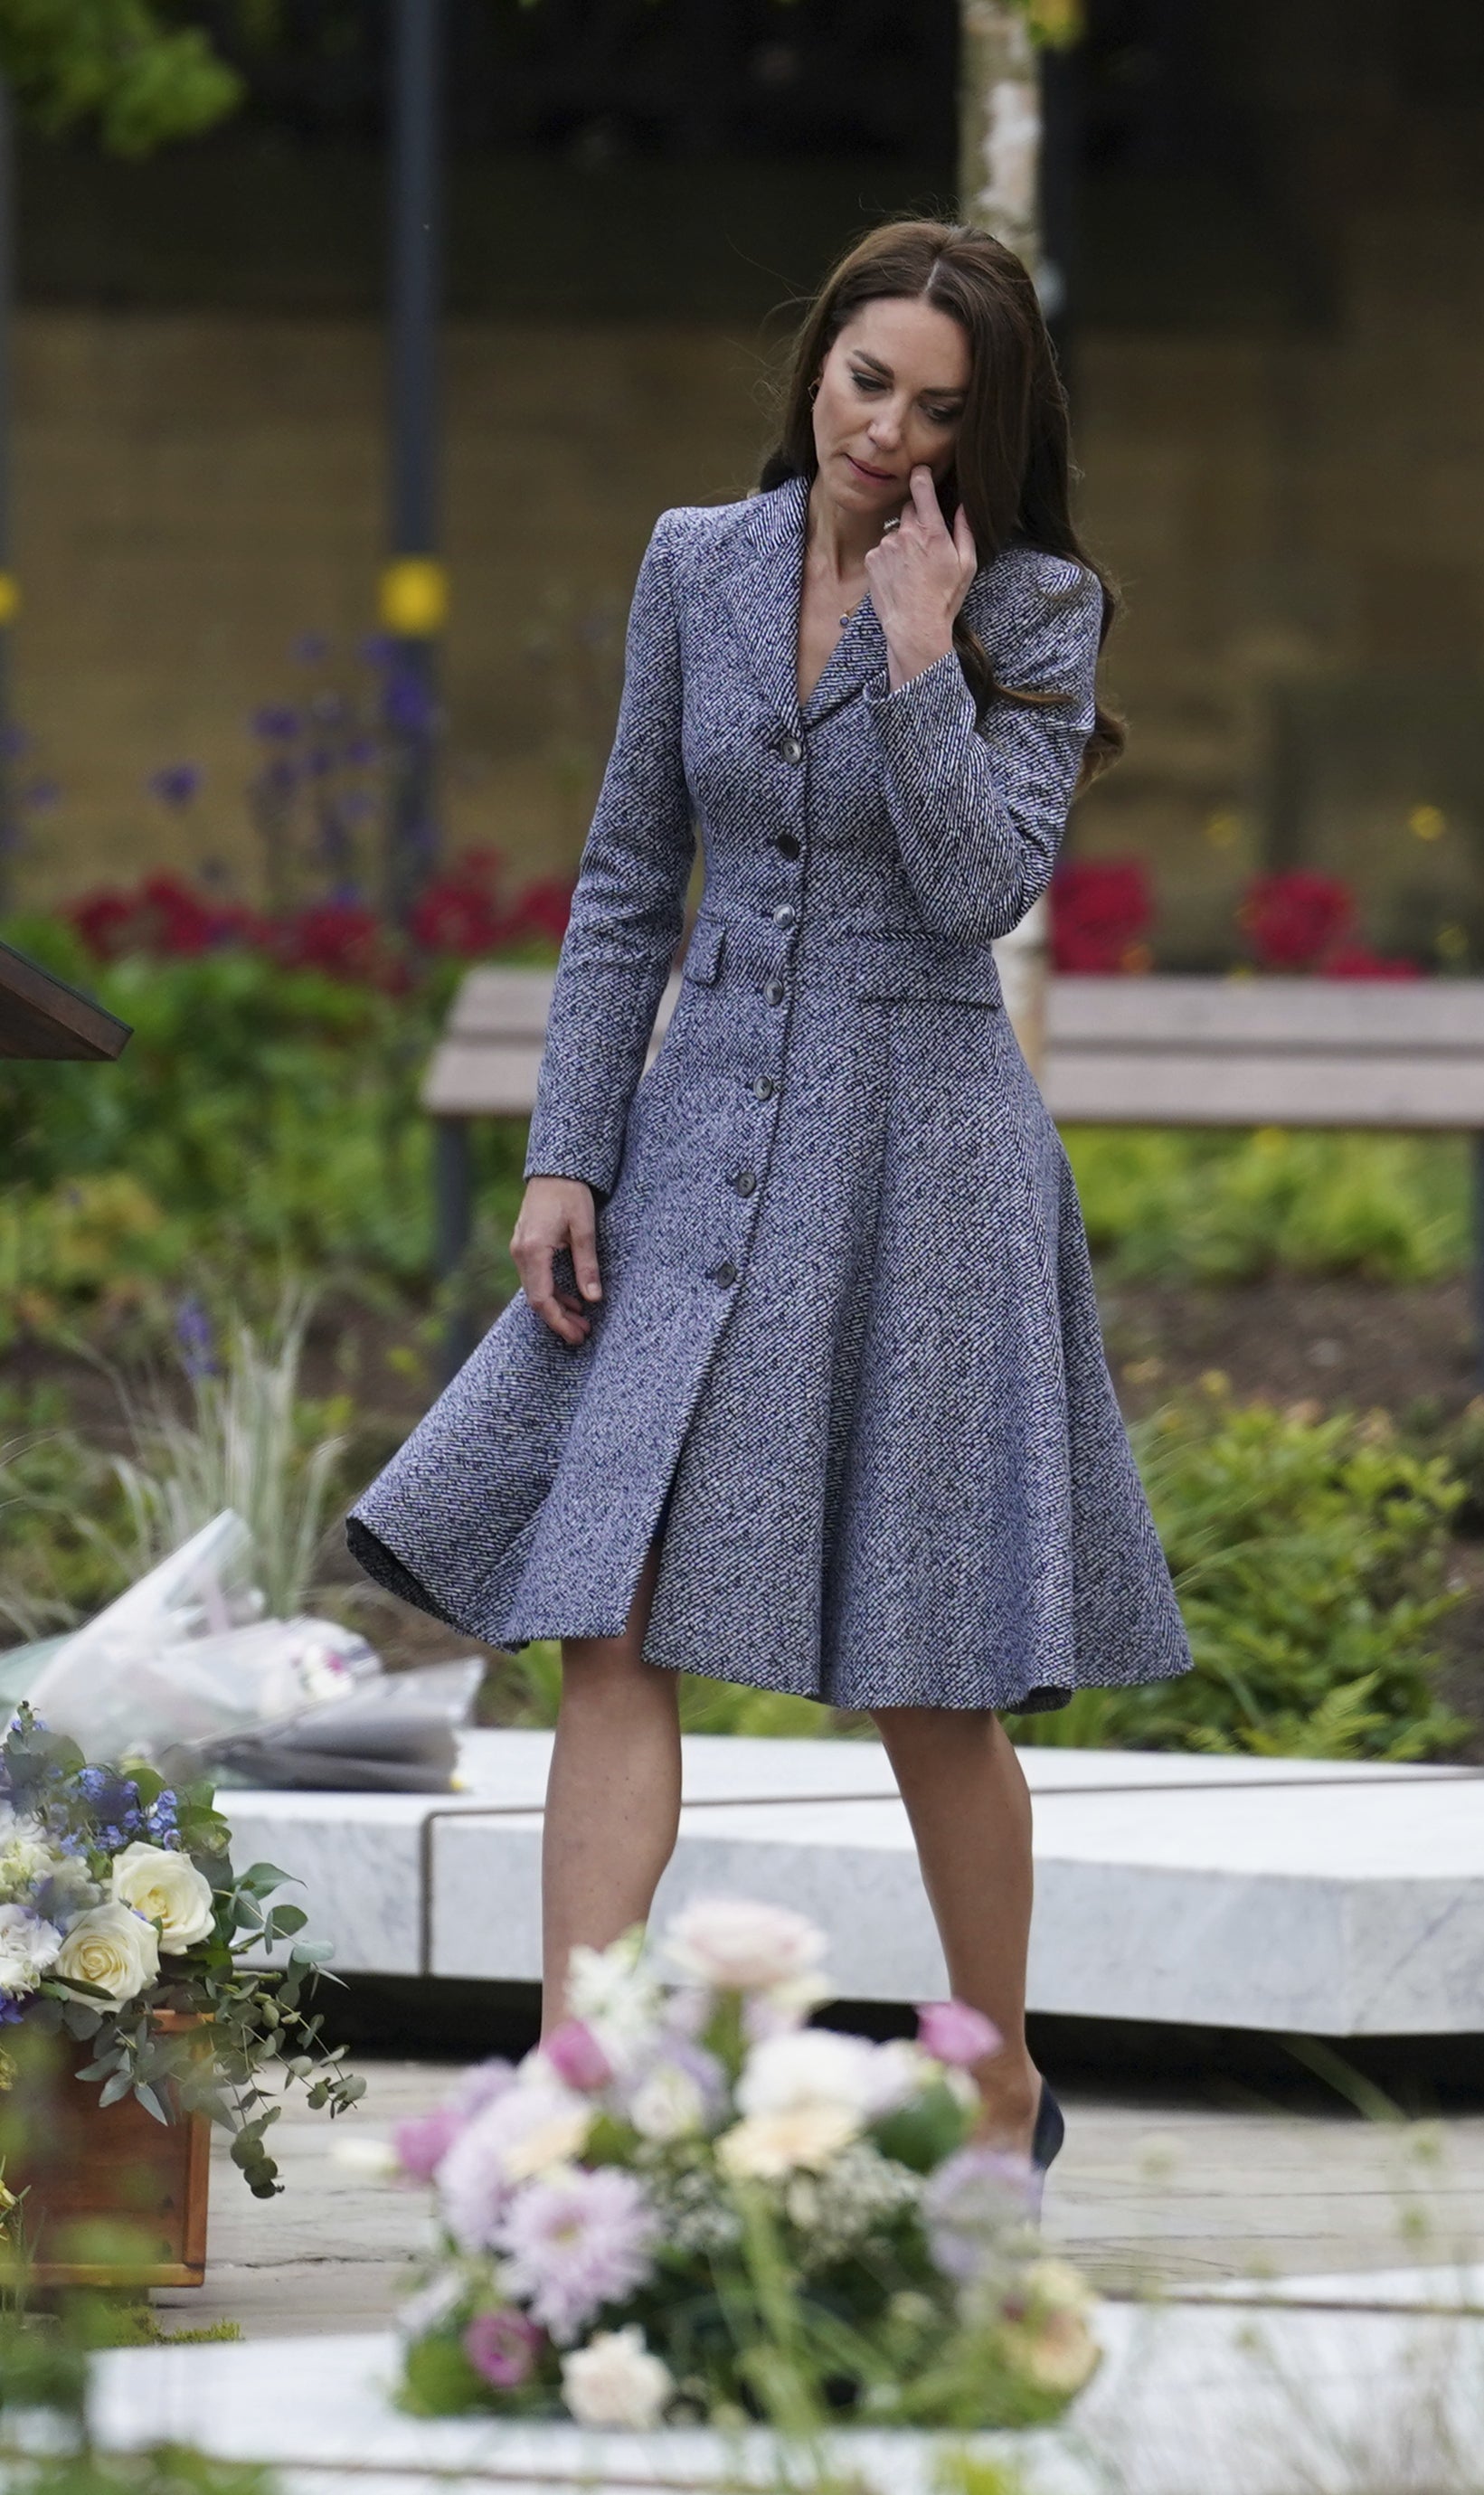 The Duchess of Cambridge at the memorial (Jon Super/PA)